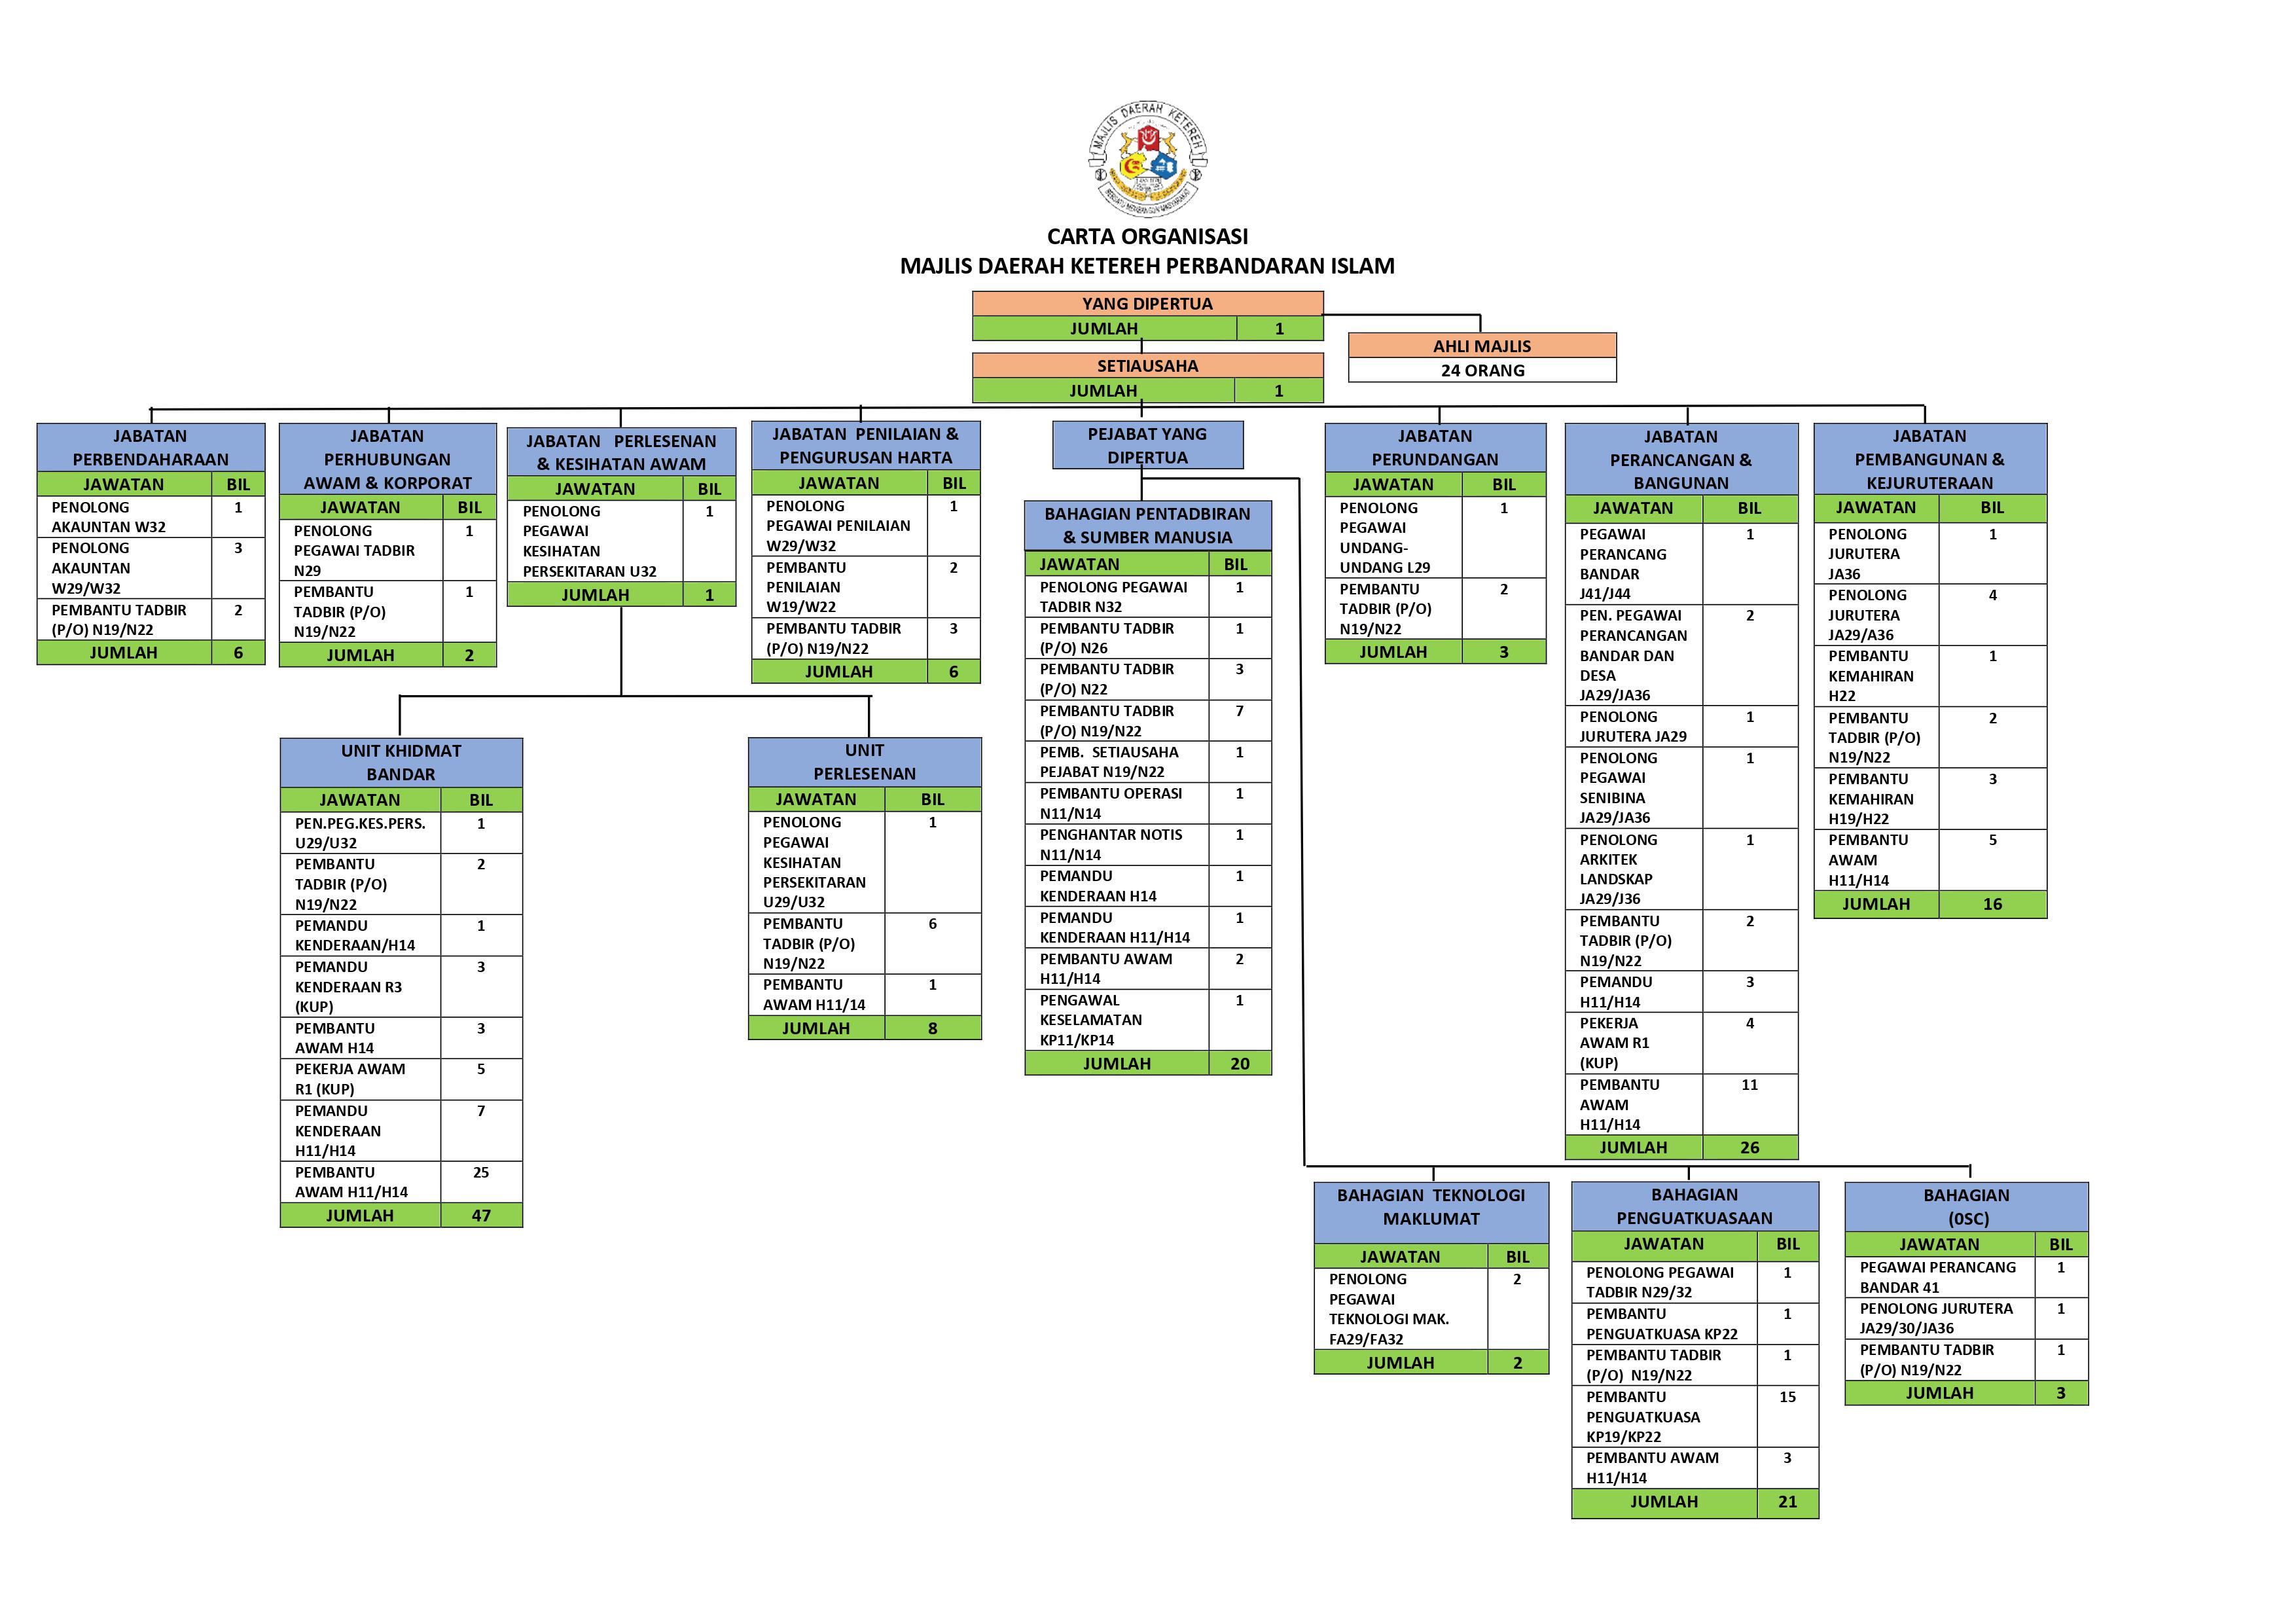 carta organisasi mdkpi 2020